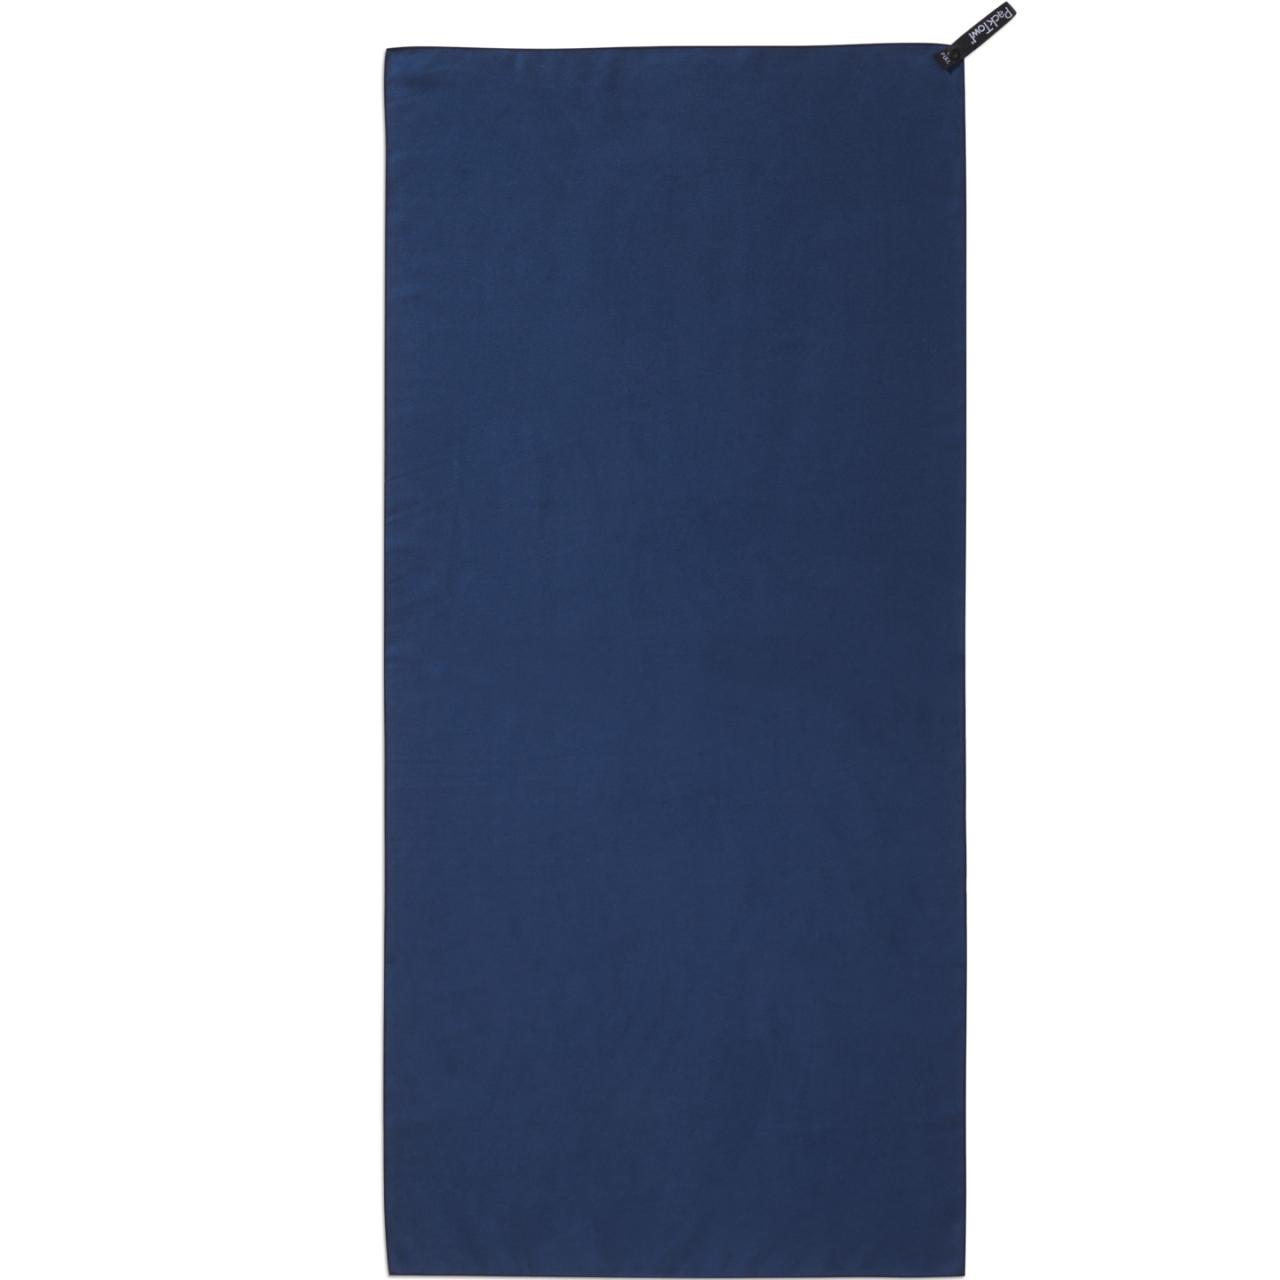 PACKTOWL PERSONAL FACE Midnight ručník 25x35cm tmavě modrý